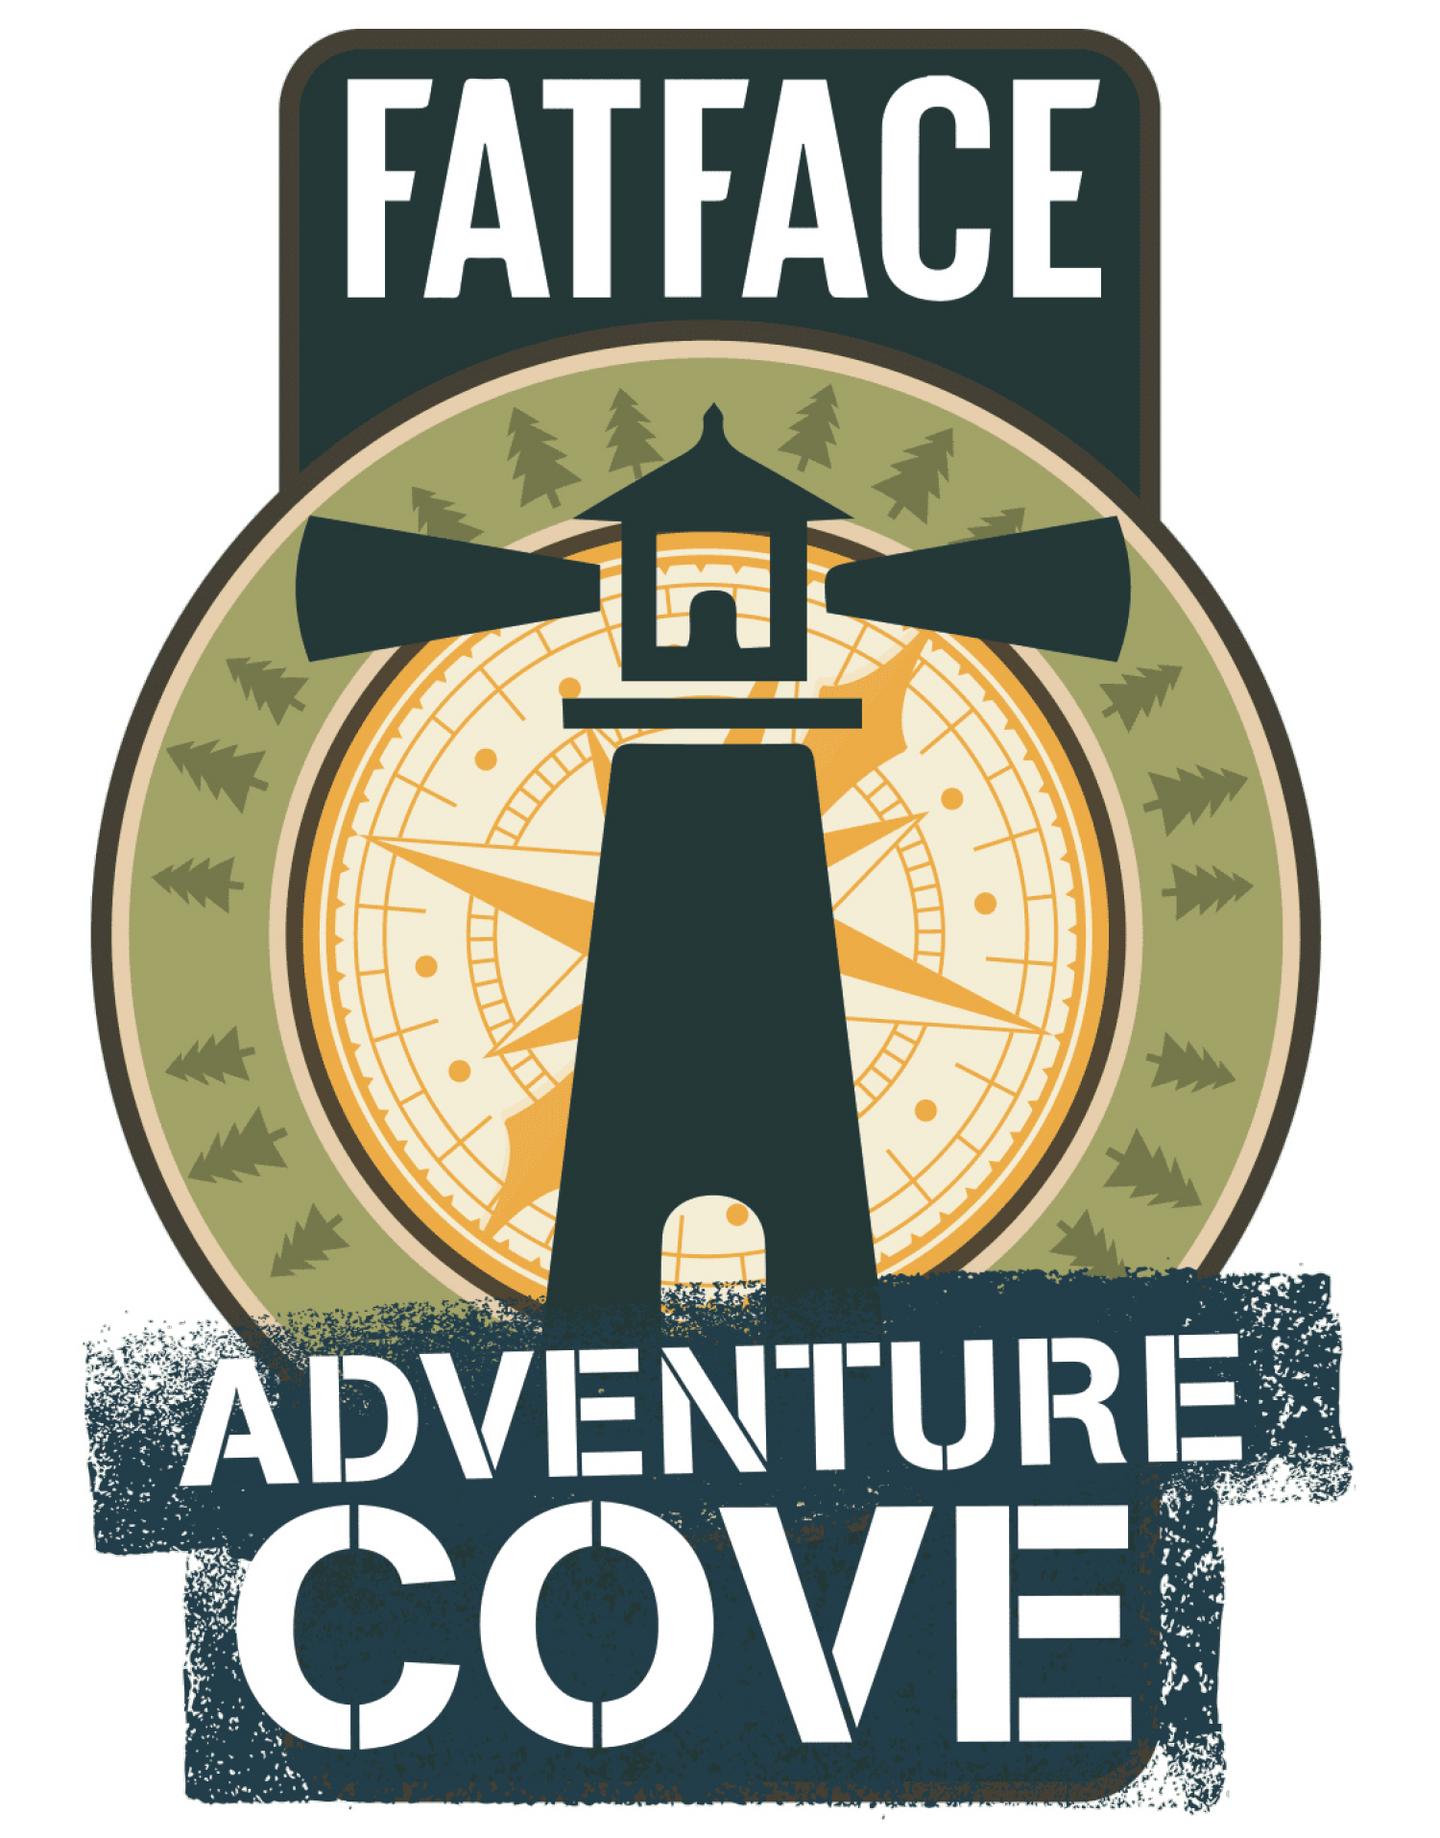 FatFace Adventure Cove.